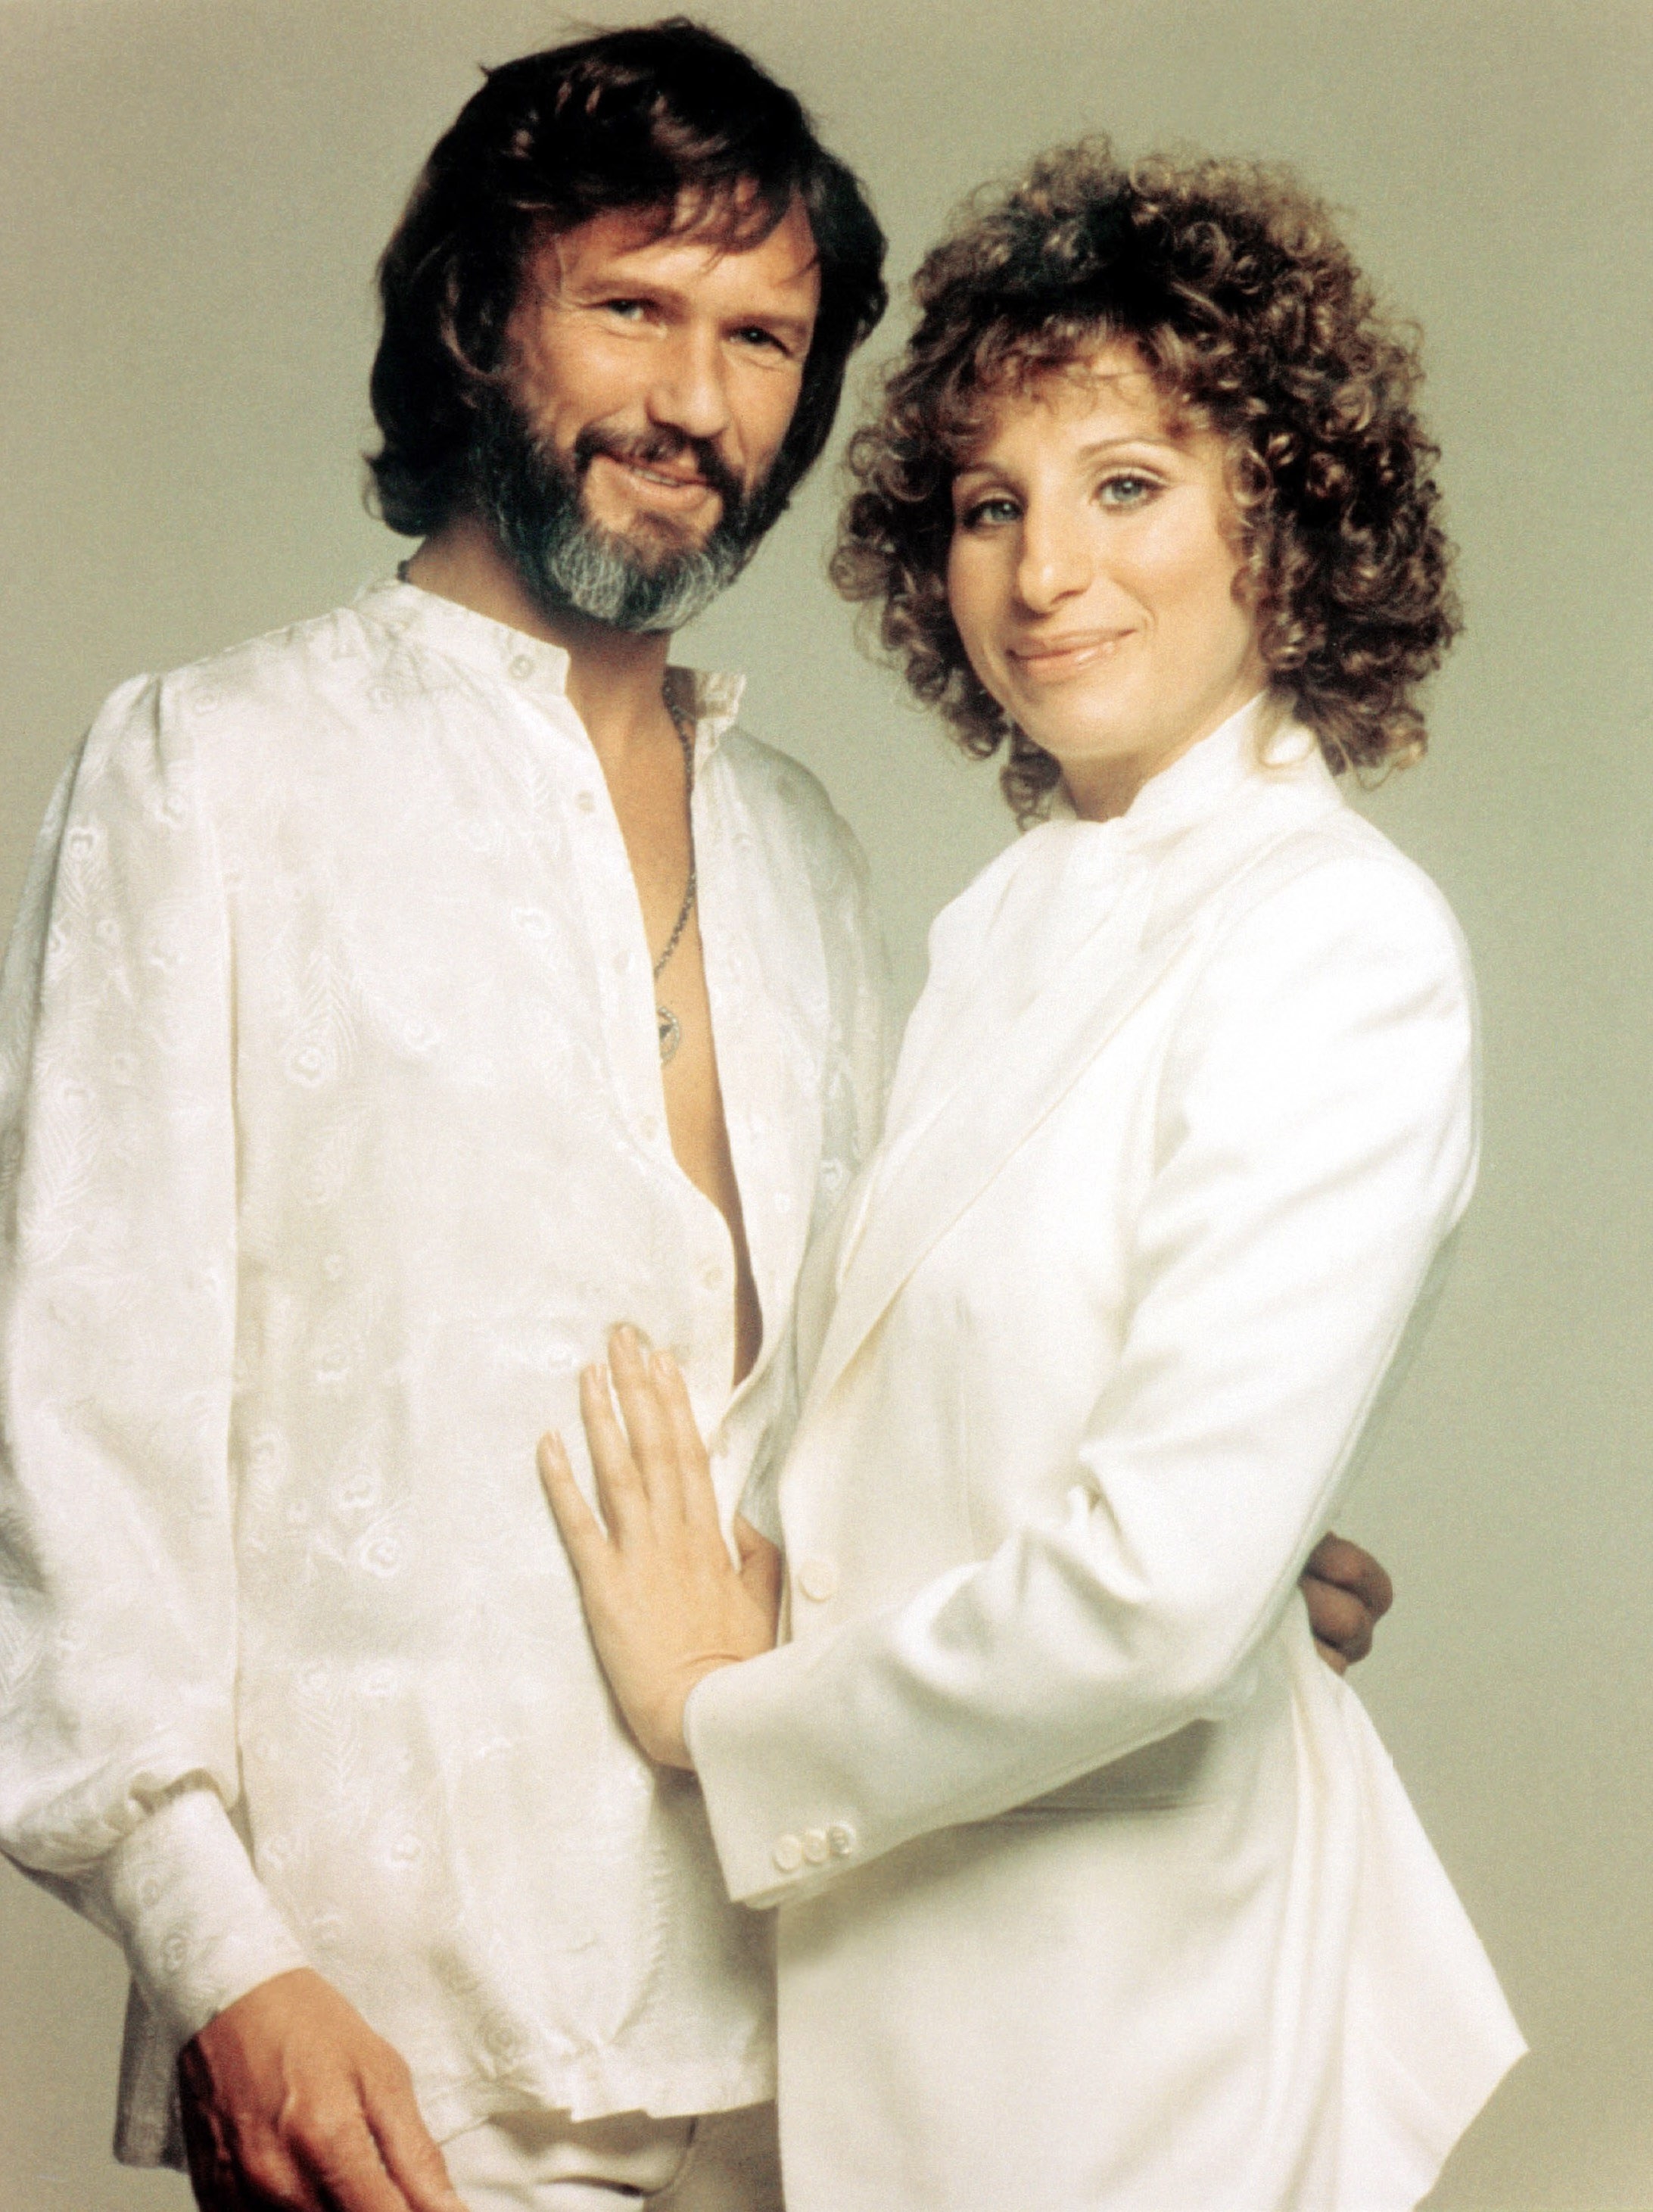 Streisand and Kristofferson posing